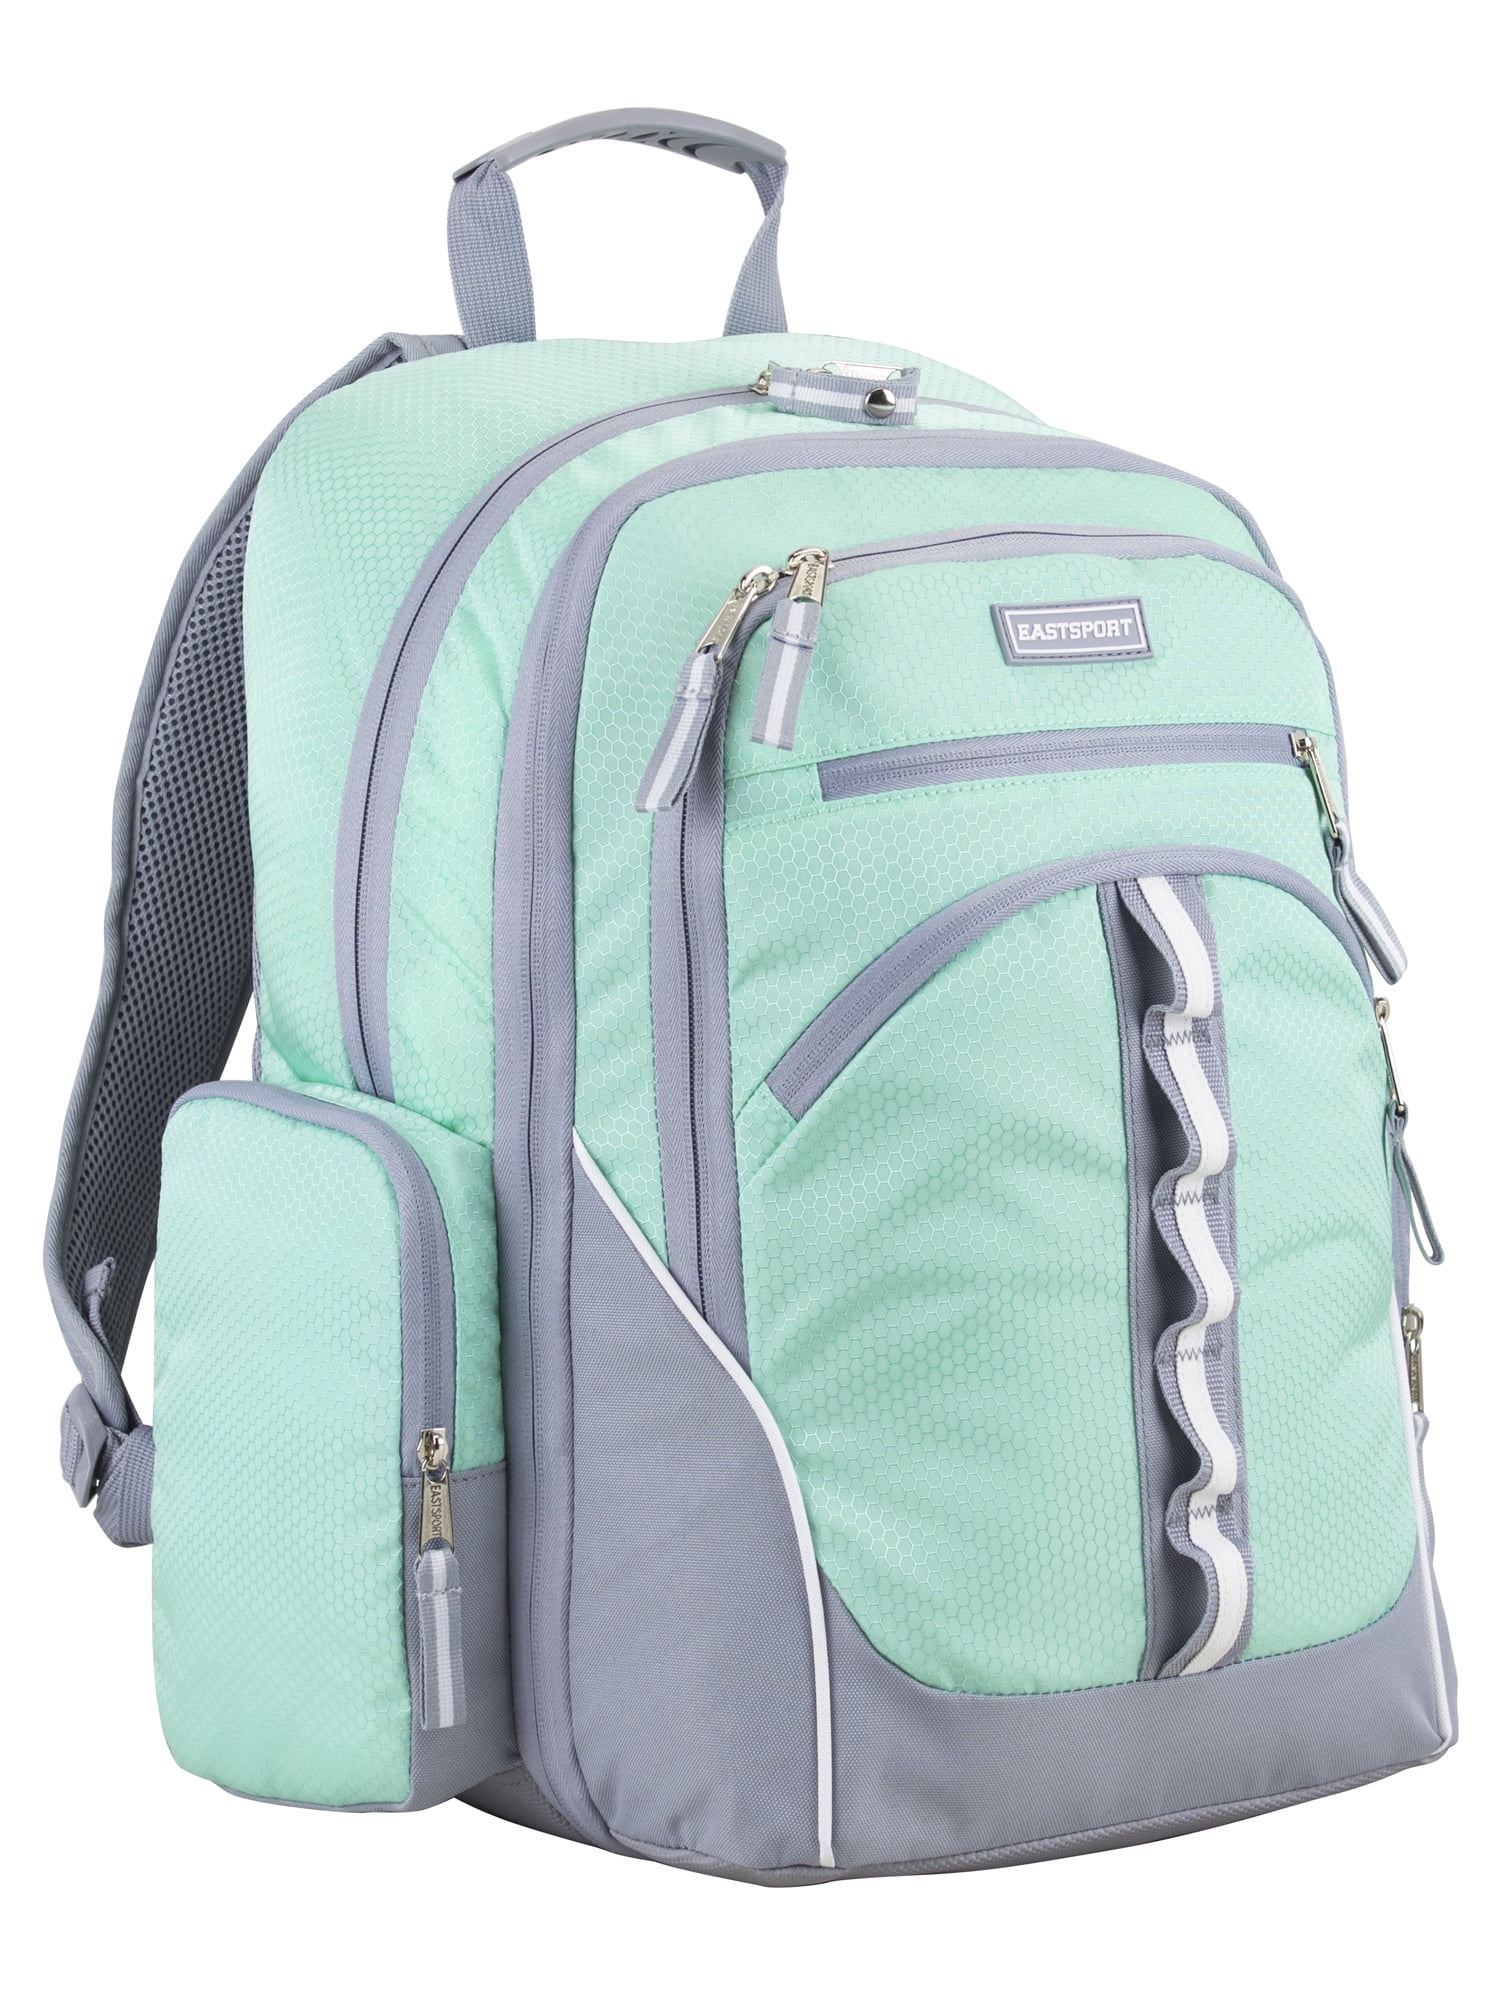 NEW Eastsport Titan 3.0 Expandable School Laptop Hiking Backpack Gray 18.5" 